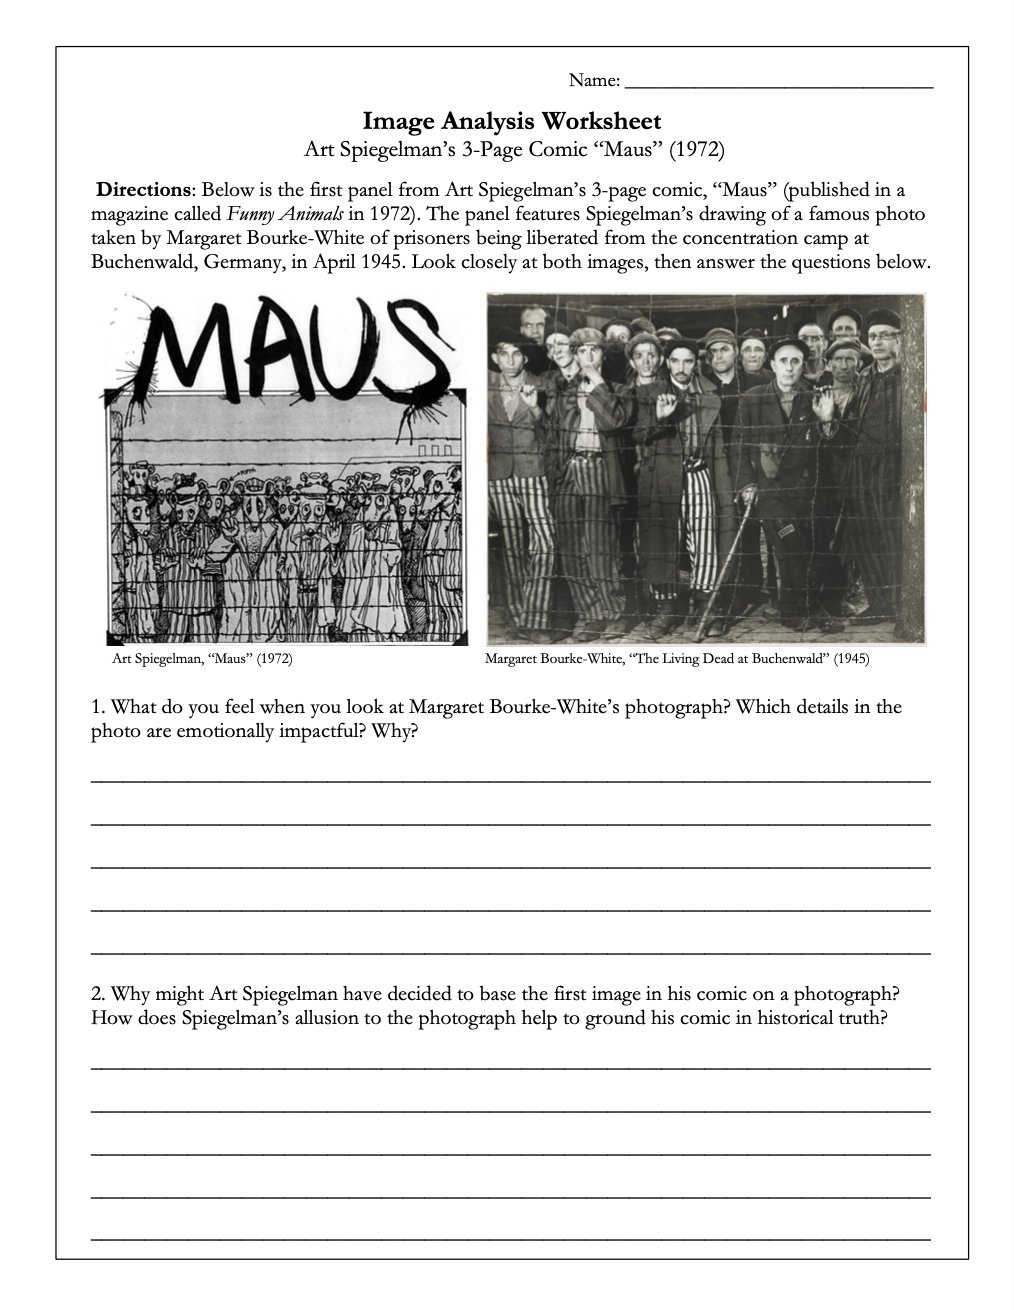 Maus by Art Spiegelman | Complete Teaching Unit